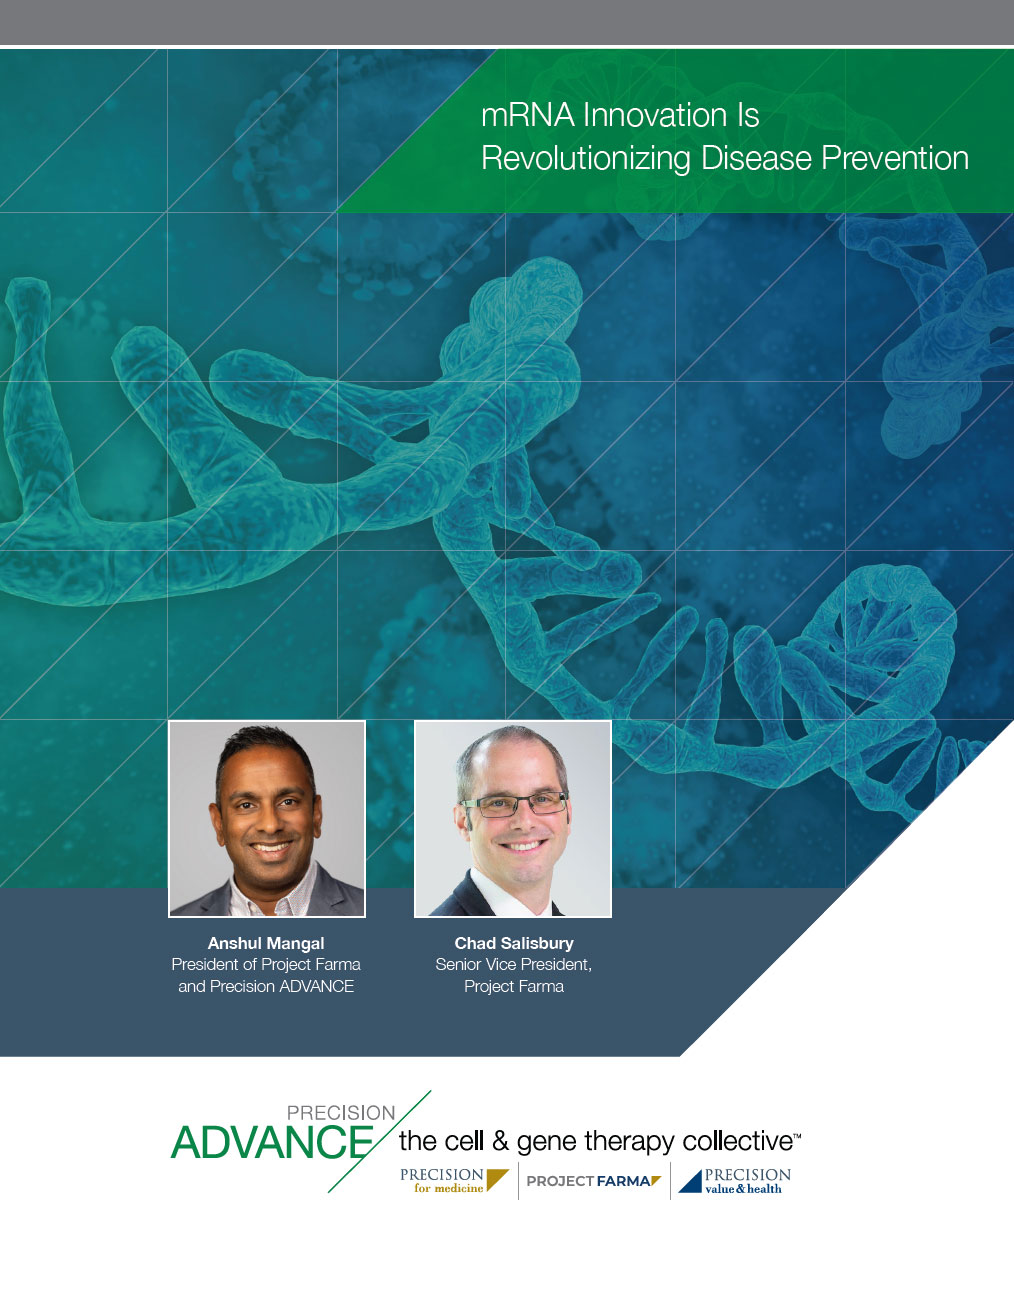 mRNA Innovation Is Revolutionizing Disease Prevention